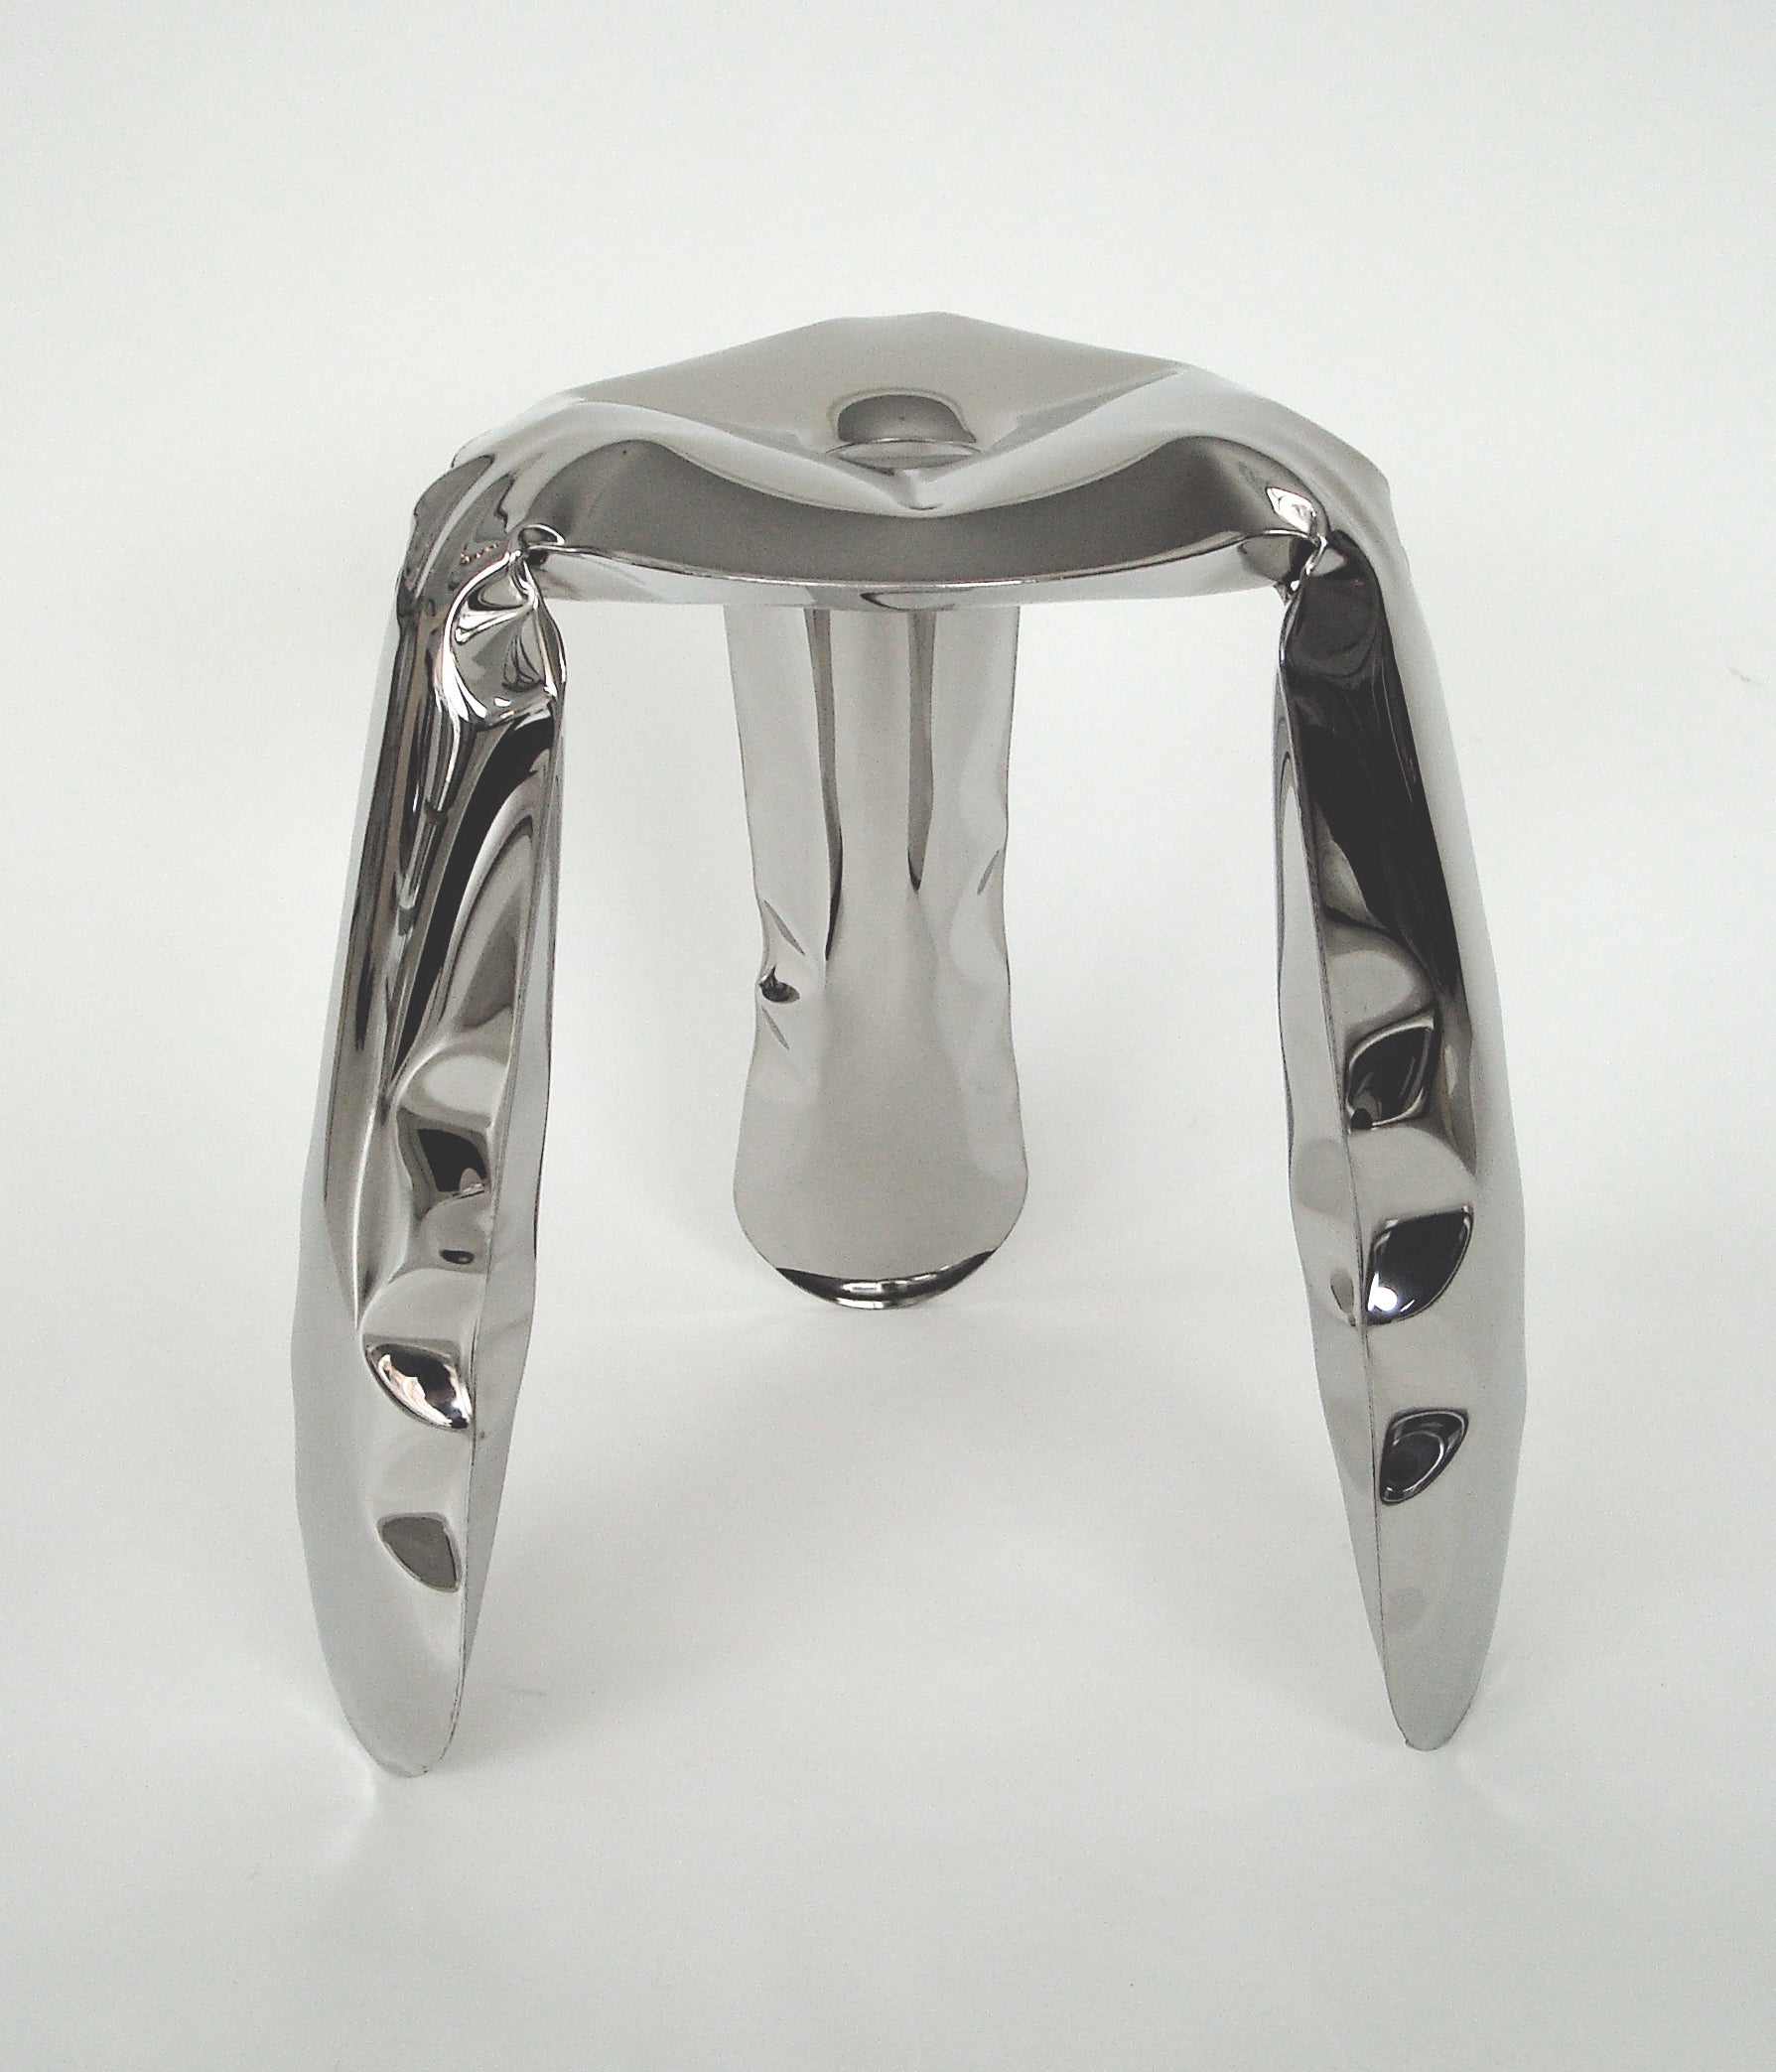 Zieta Plopp Stool by Zieta Prozessdesign in Polished Stainless Steel